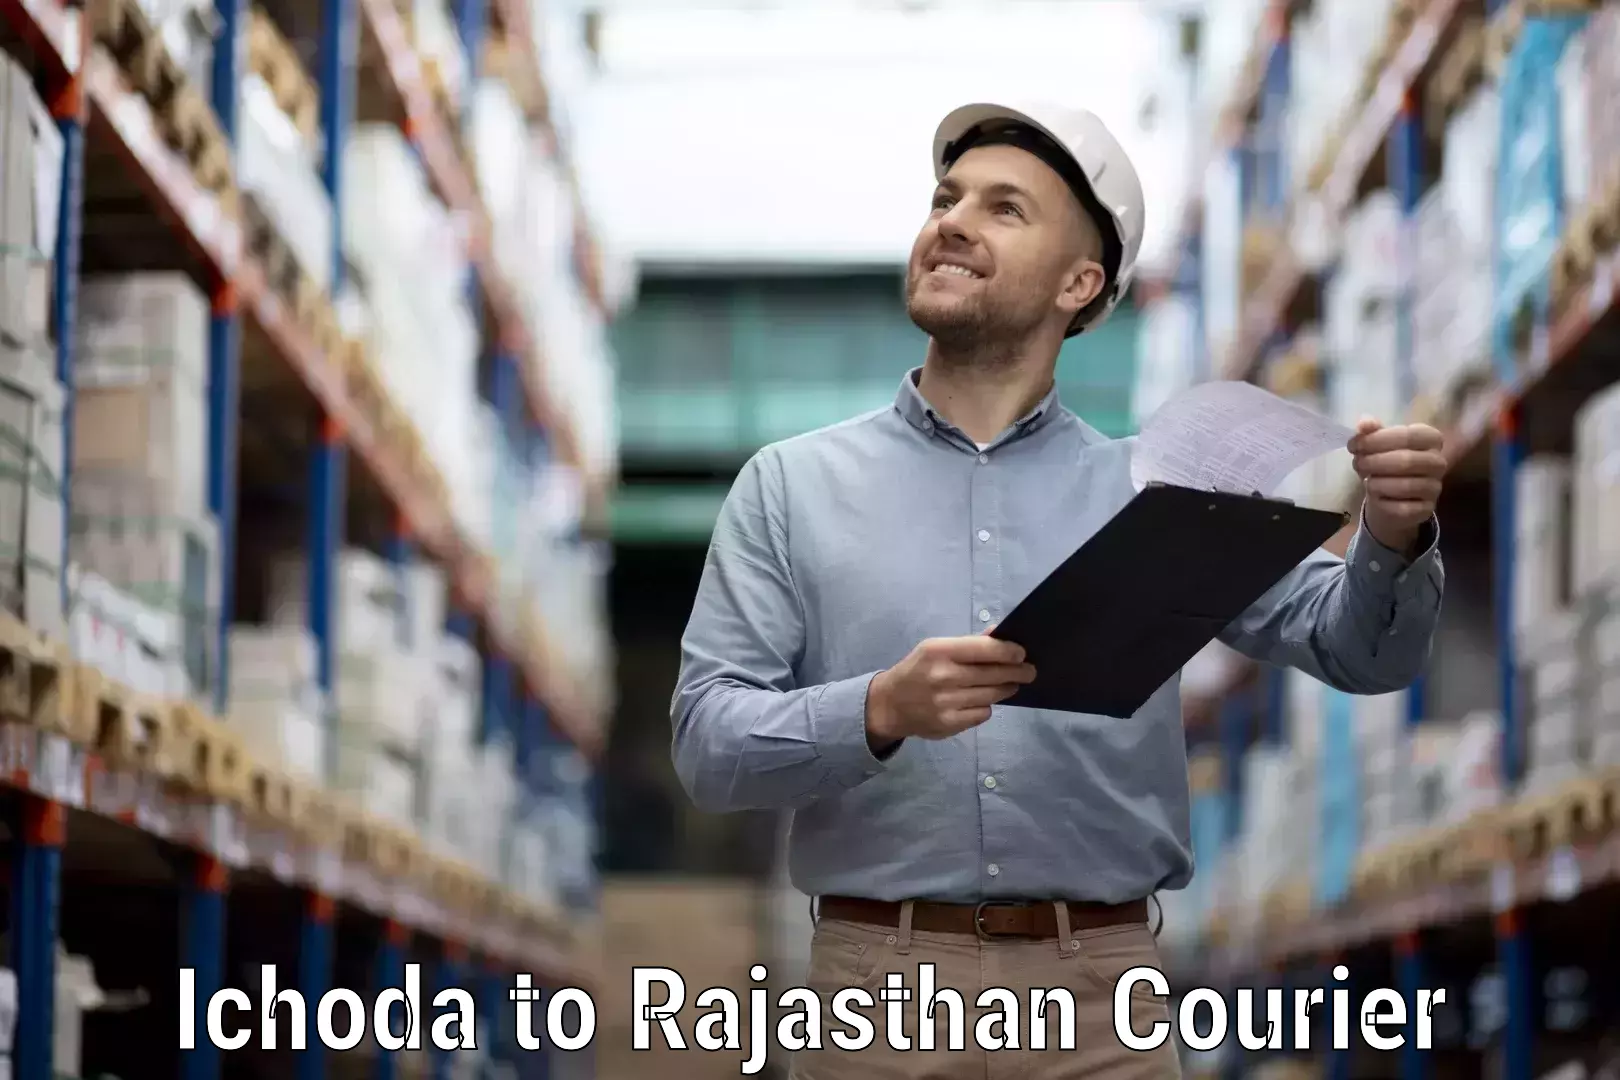 Courier service comparison Ichoda to Jhalawar